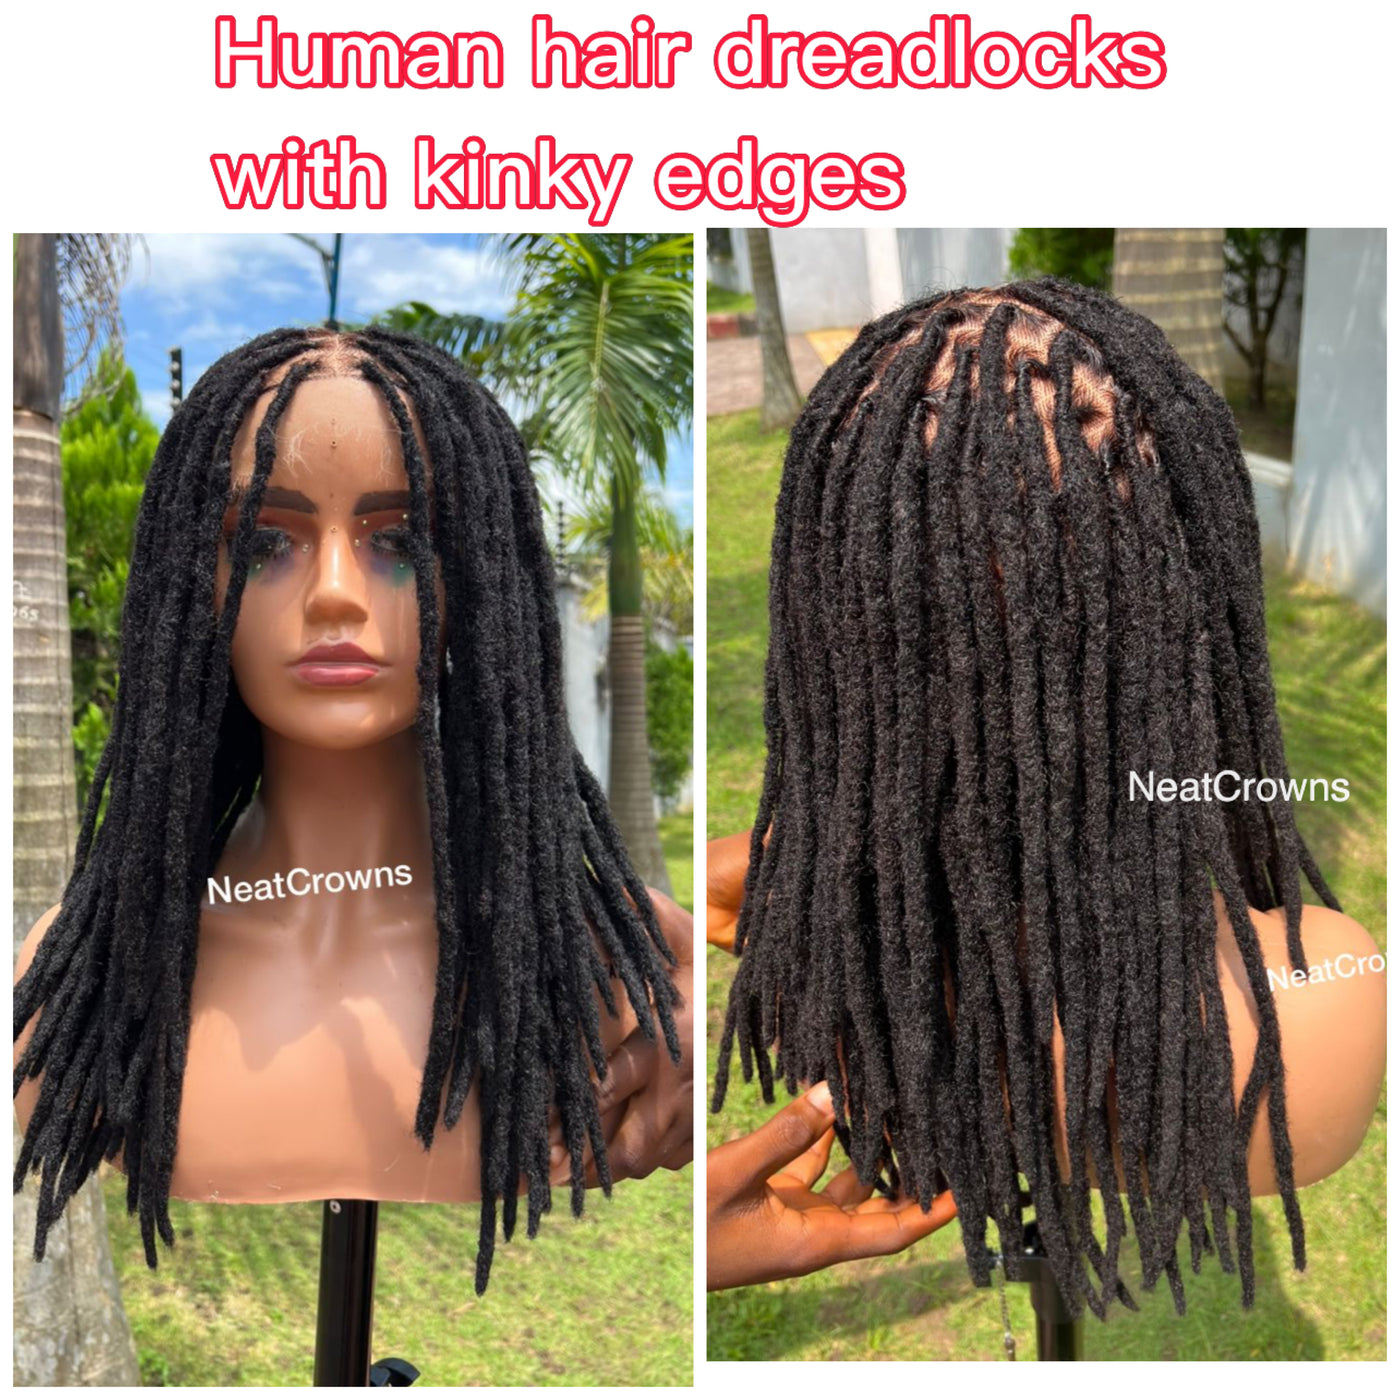 Human hair dreadlocks wig with kinky edges